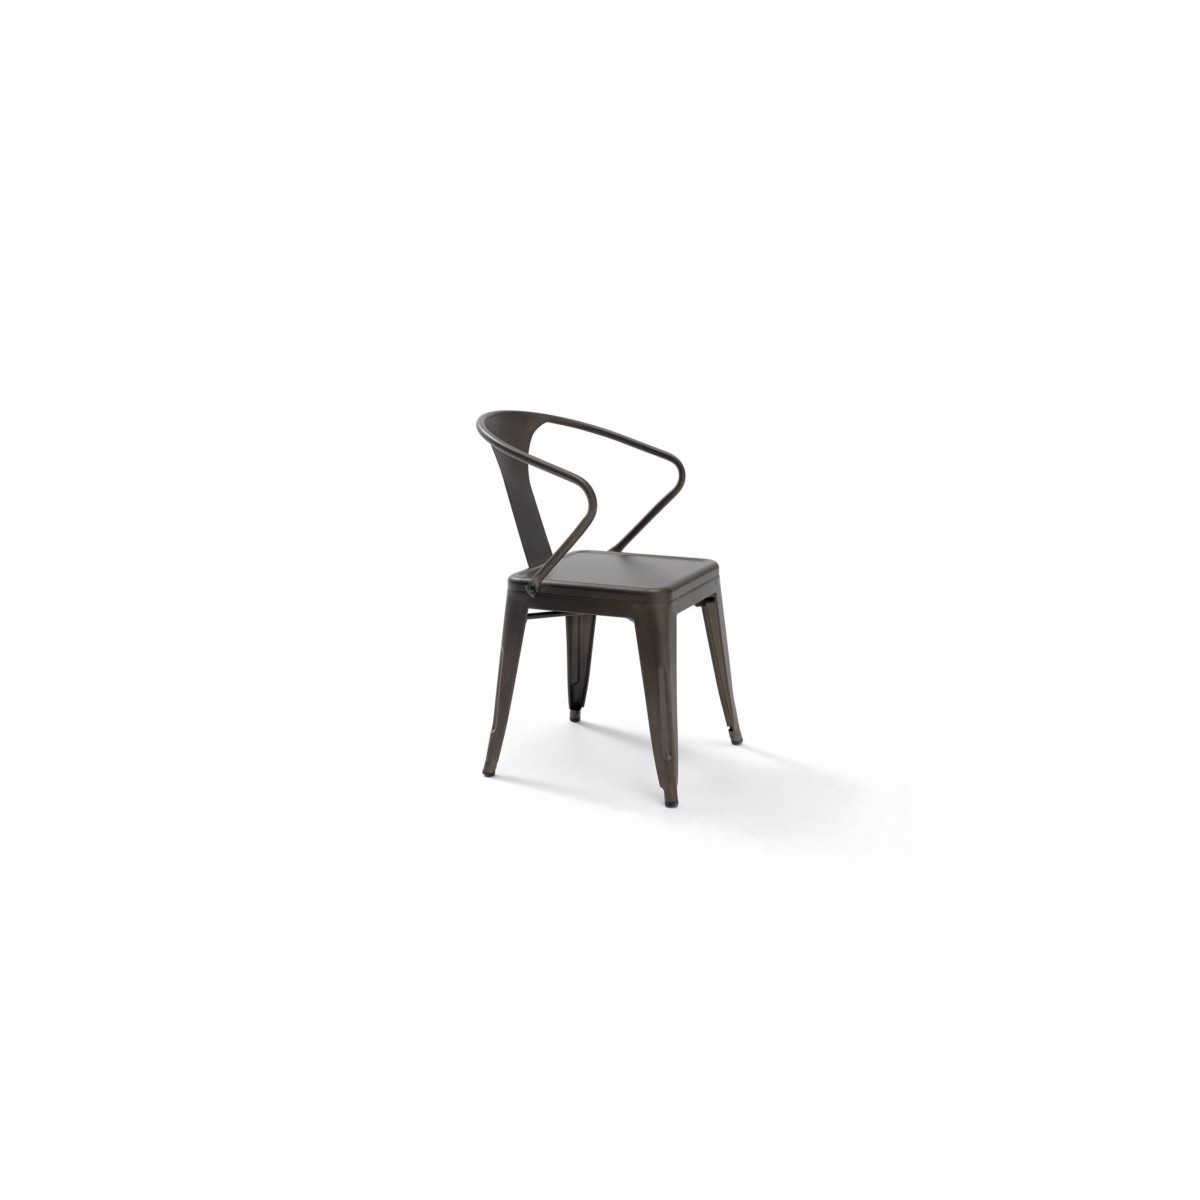 IRON chair